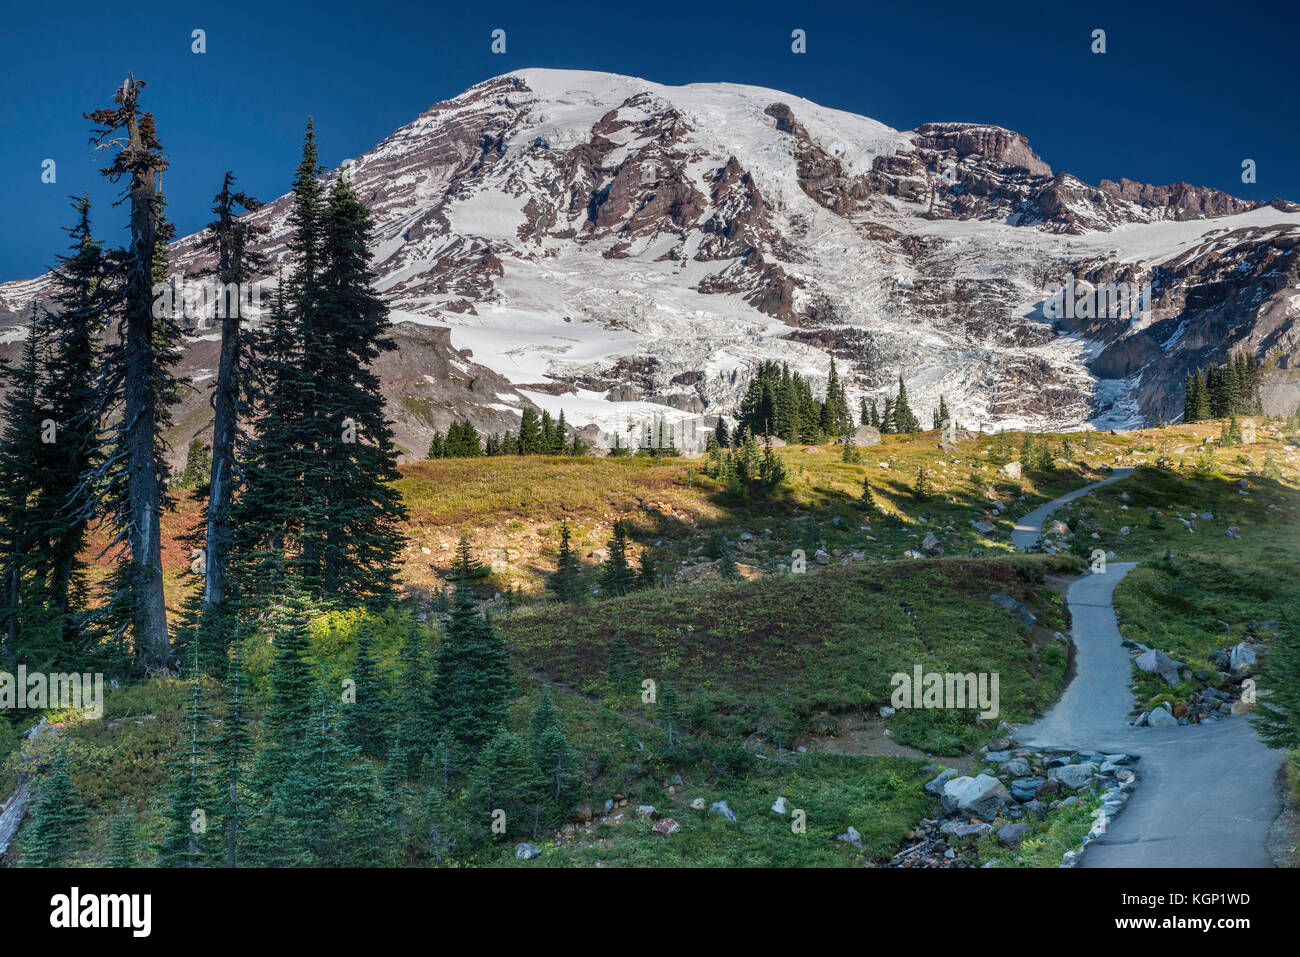 Mount Rainier, from Skyline Trail, late September, Mount Rainier National Park, Washington state, USA Stock Photo